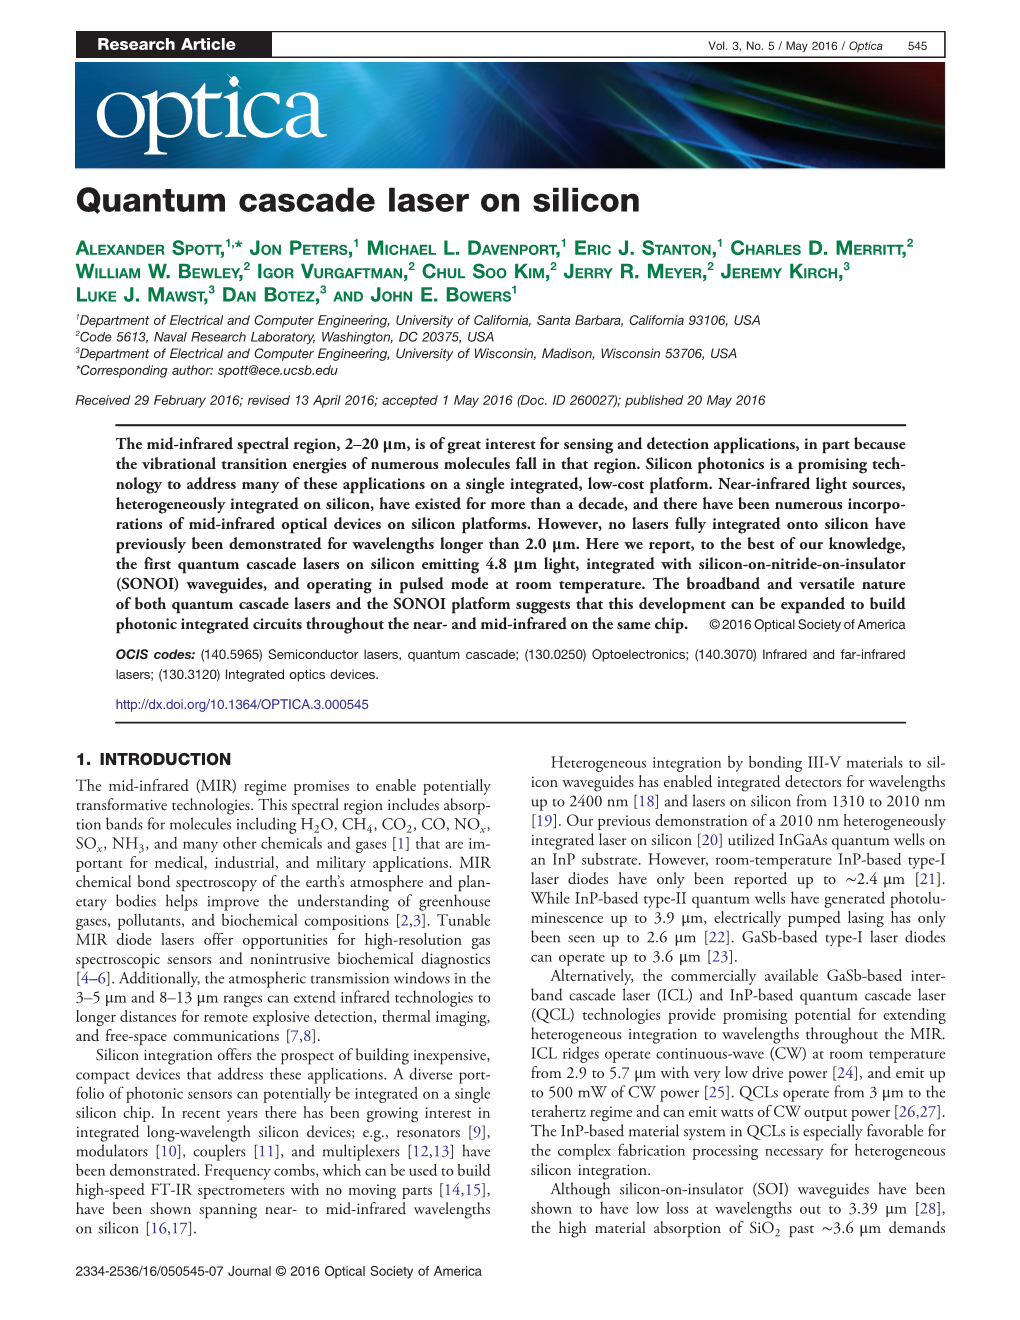 Quantum Cascade Laser on Silicon